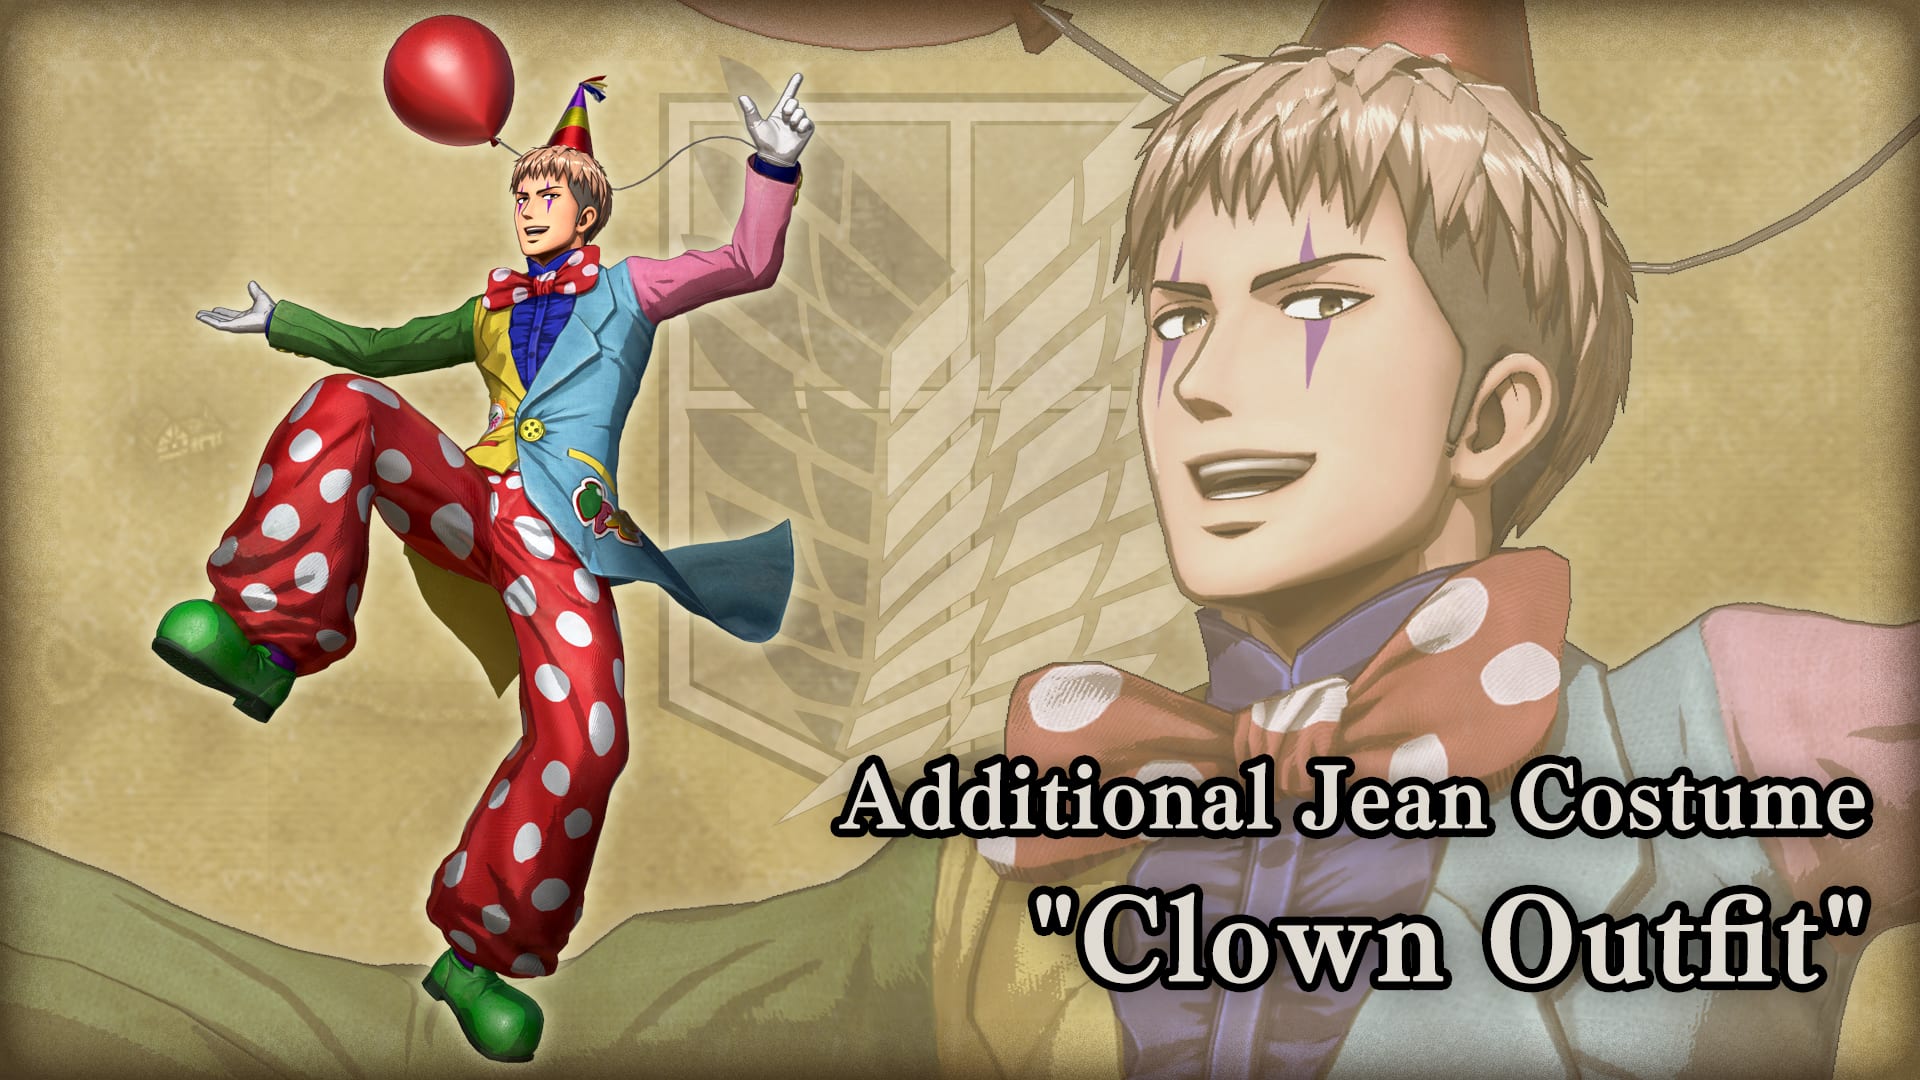 Roupa adicional para Jean, Clown